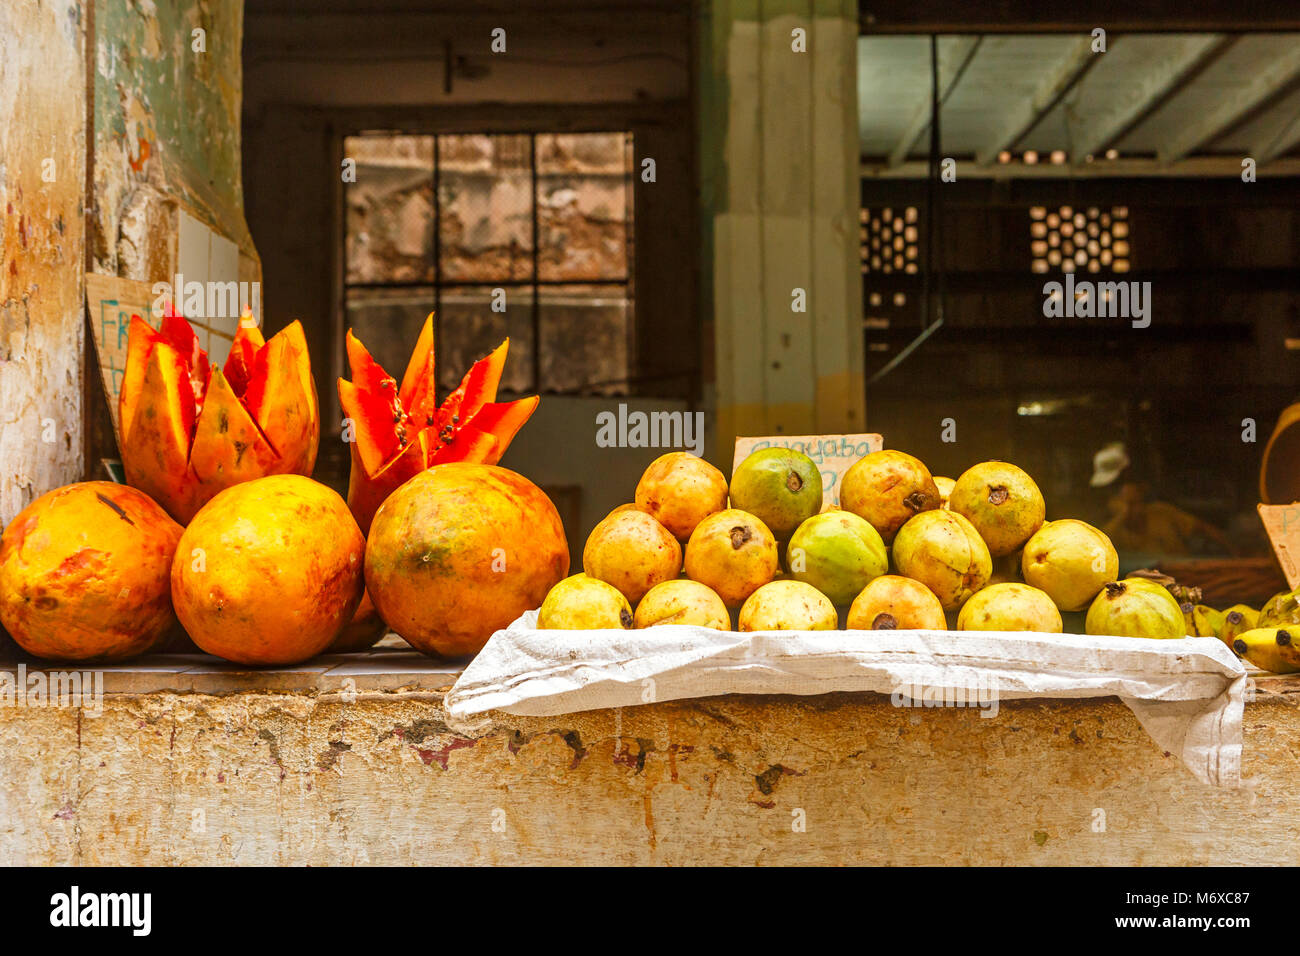 Guavas and Papaya at a Produce Stand in Havana Cuba Stock Photo